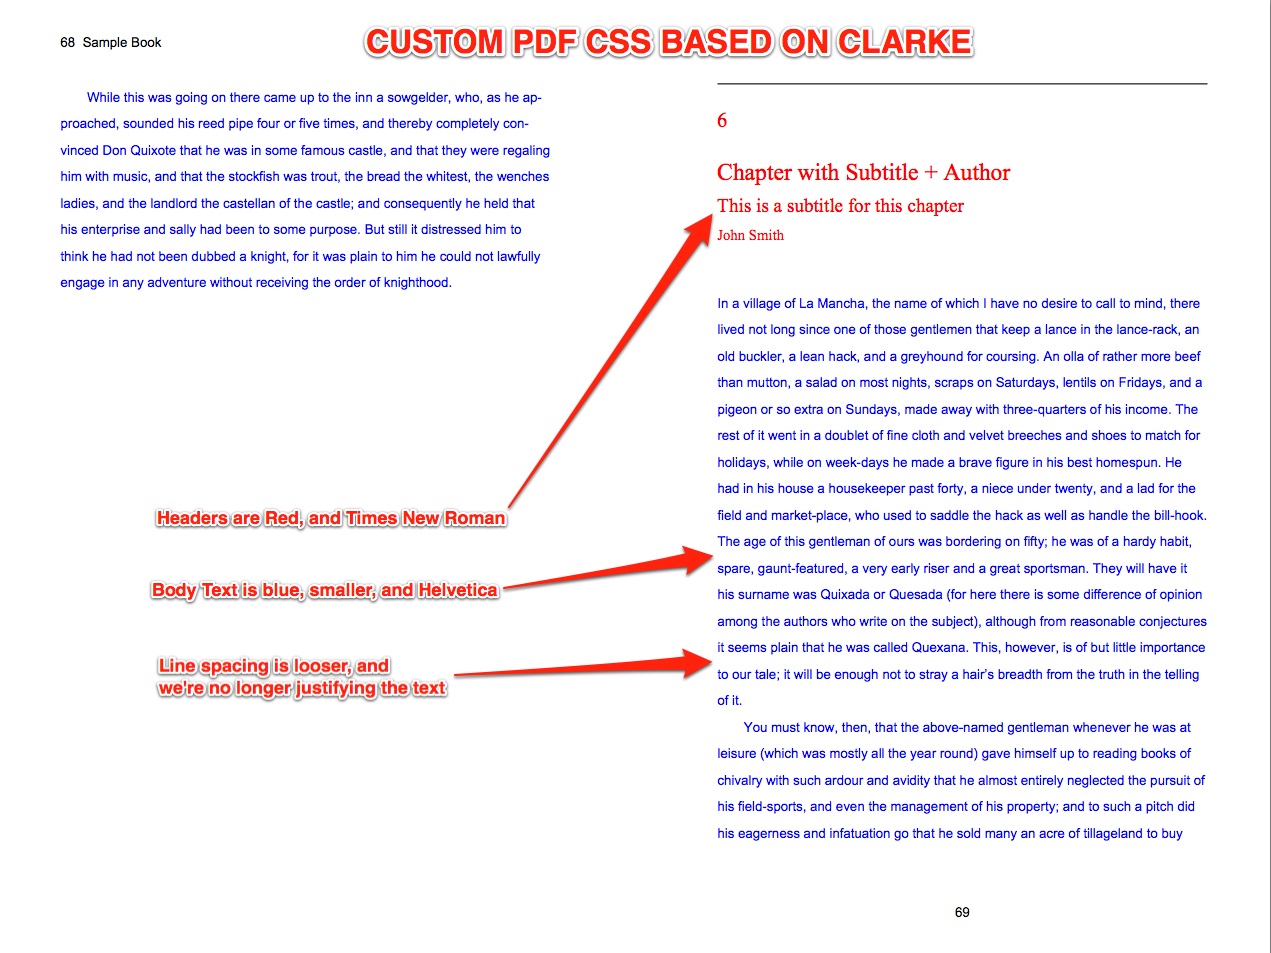 Custom PDF CSS (Clarke variant)